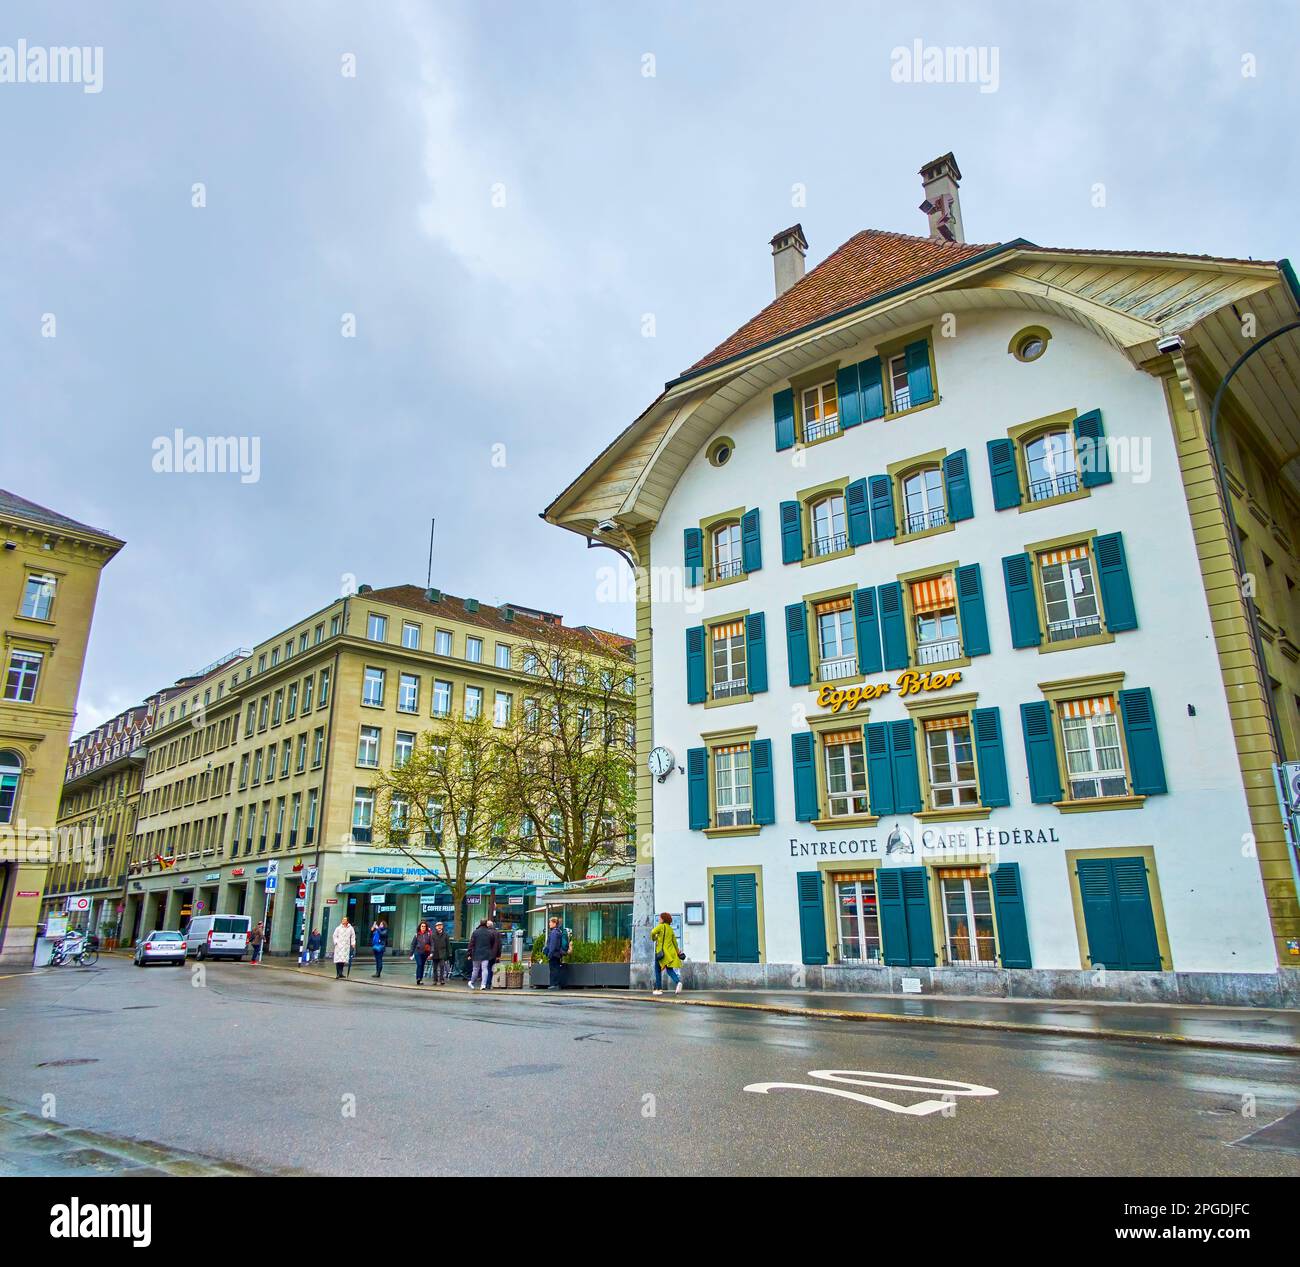 BERN, SWITZERLAND - MARCH 31, 2022: Scenic historic building on Bundesplatz with restaurant on ground floor, on March 31 in Bern, Switzerland Stock Photo